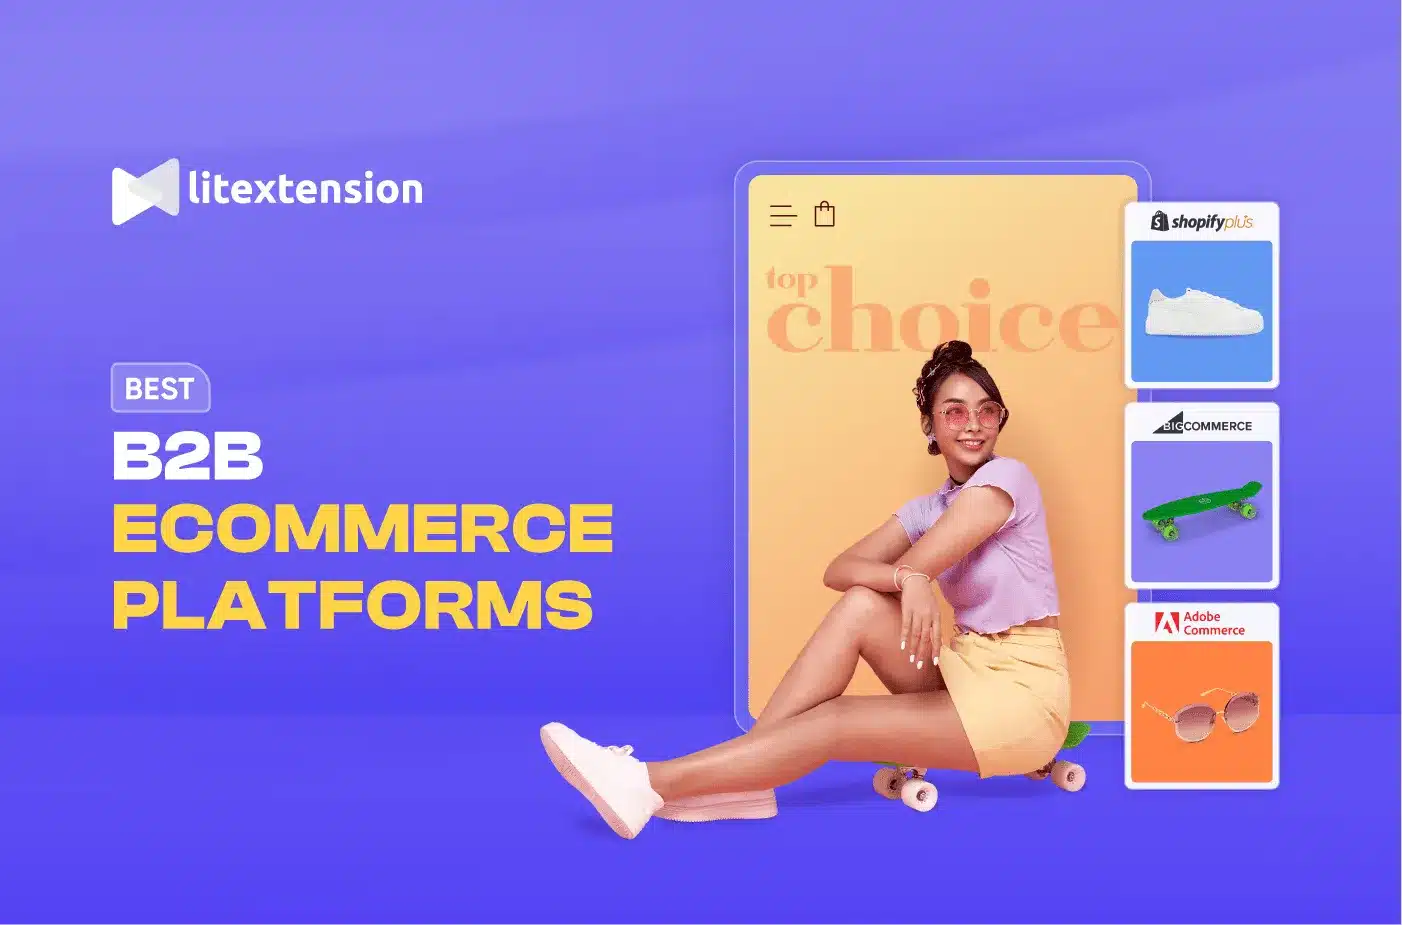 Best B2B eCommerce platform